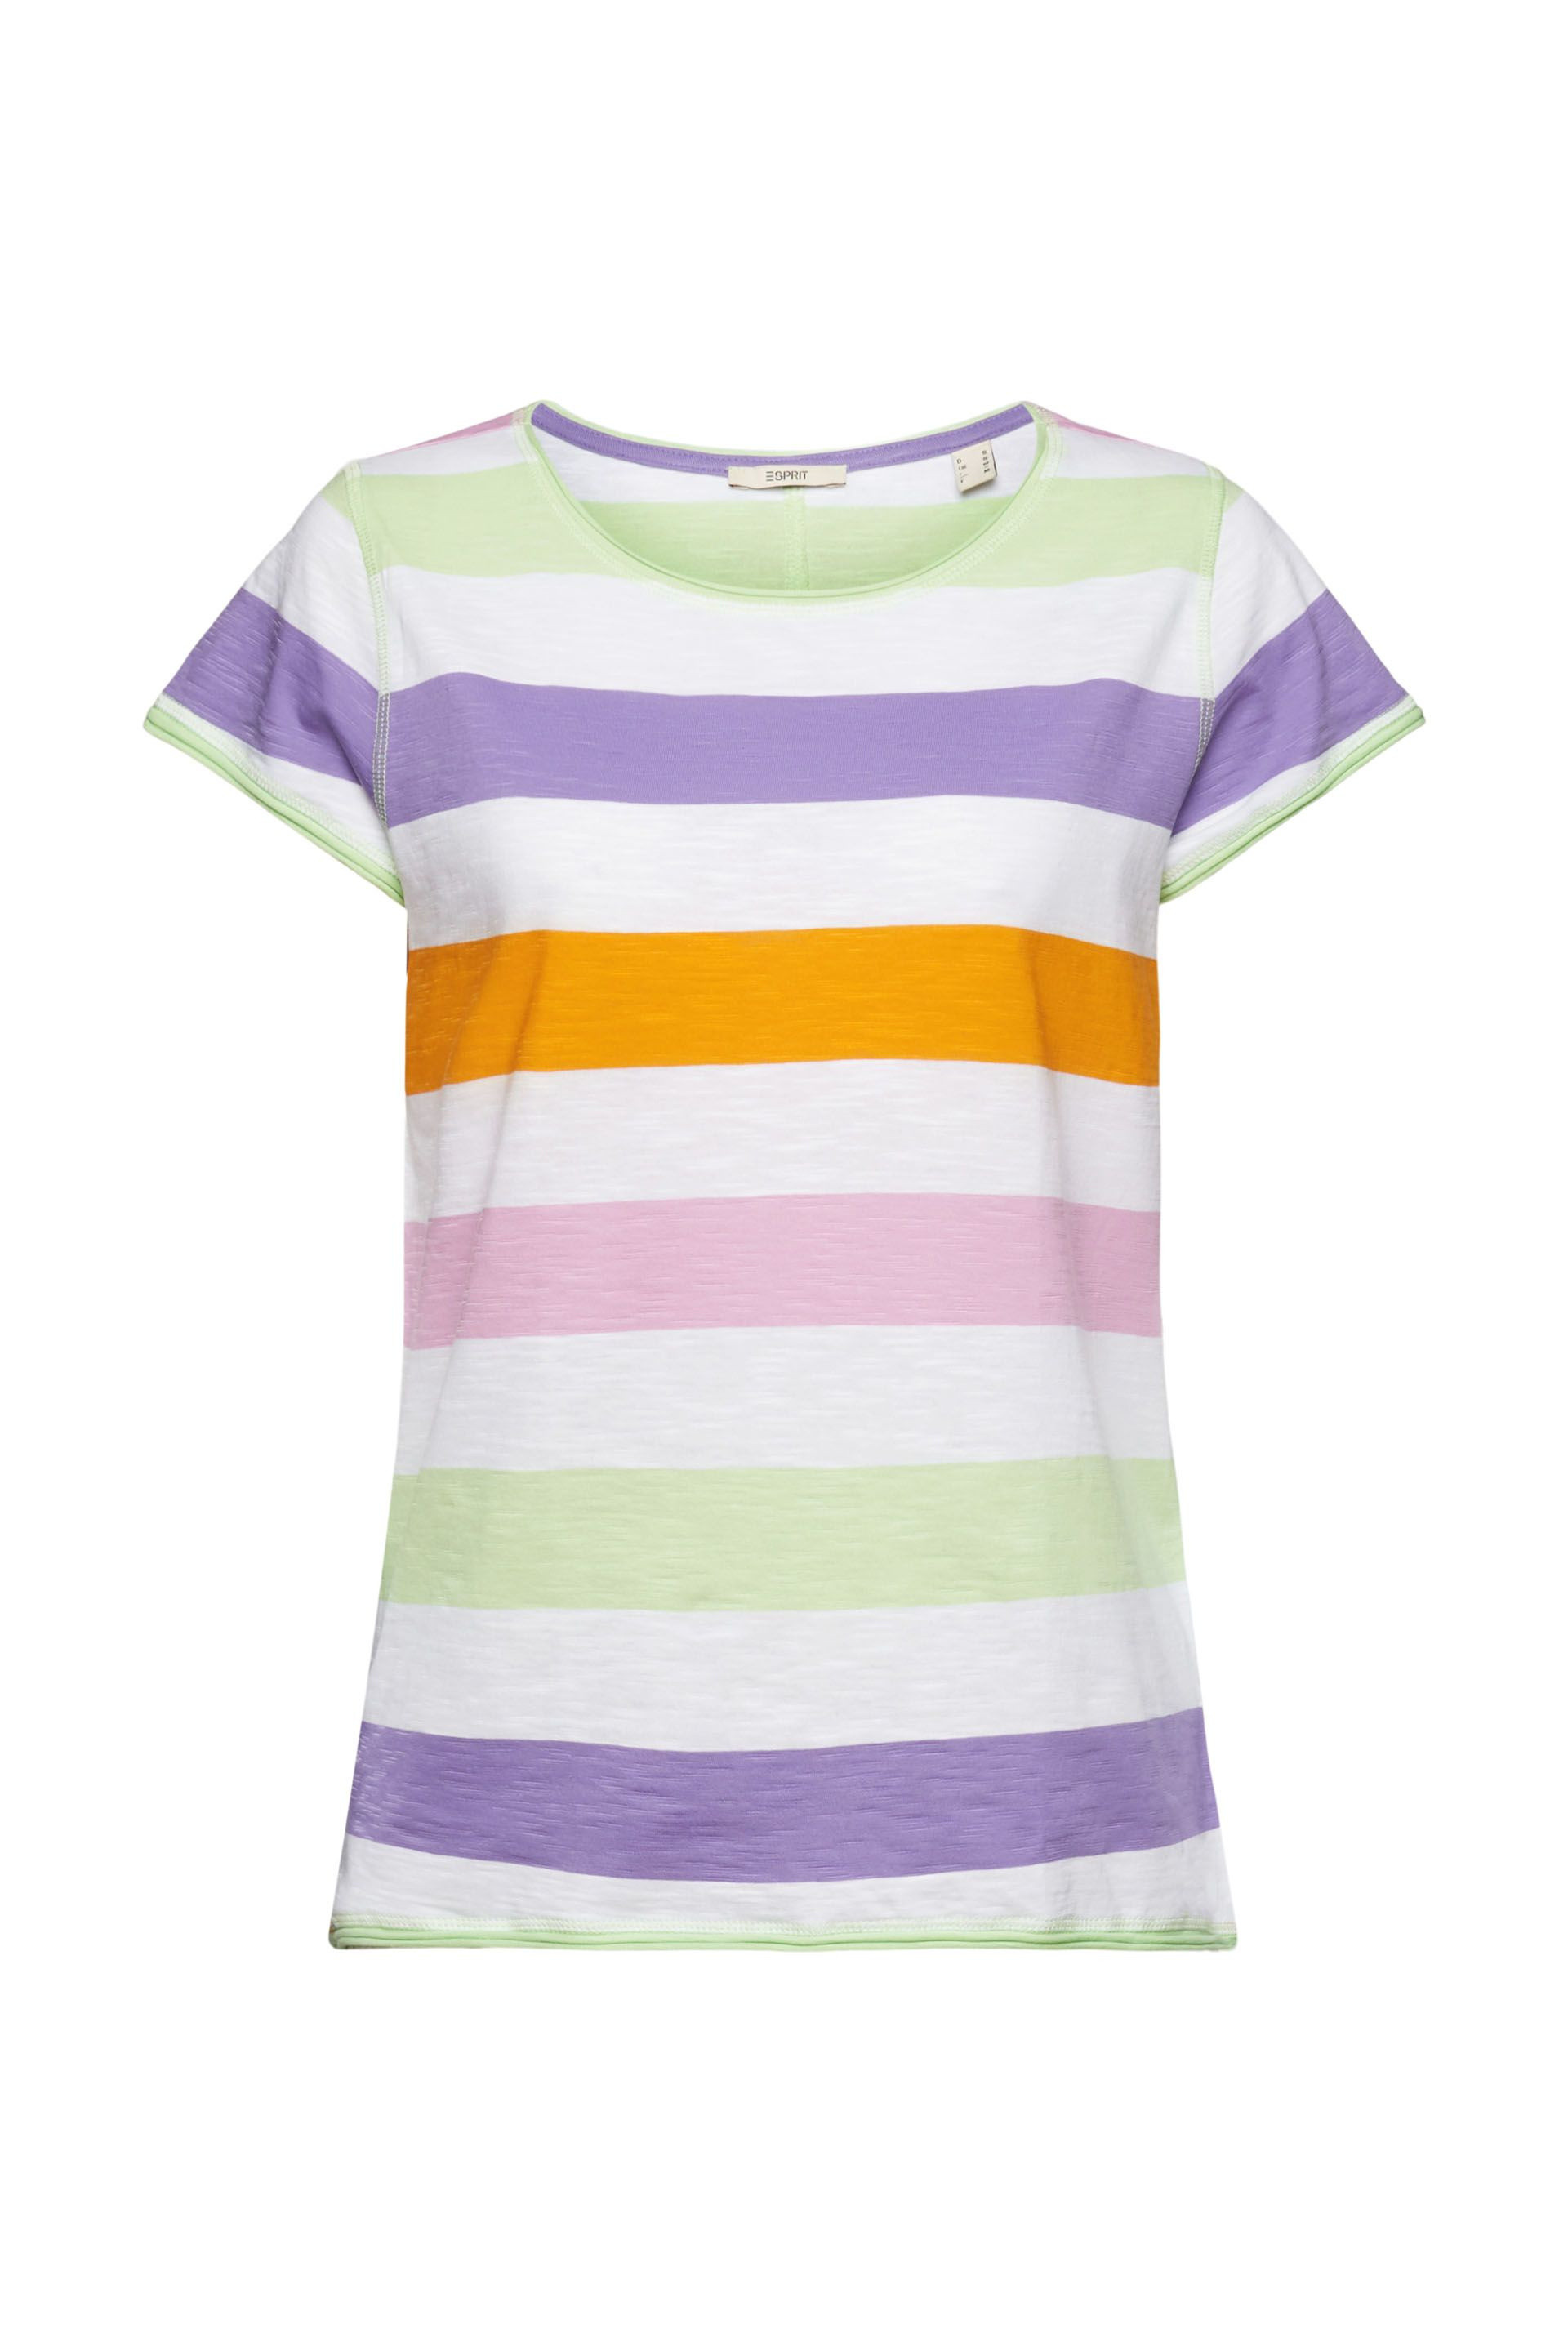 Esprit - Striped T-Shirt, Multicolor, large image number 0